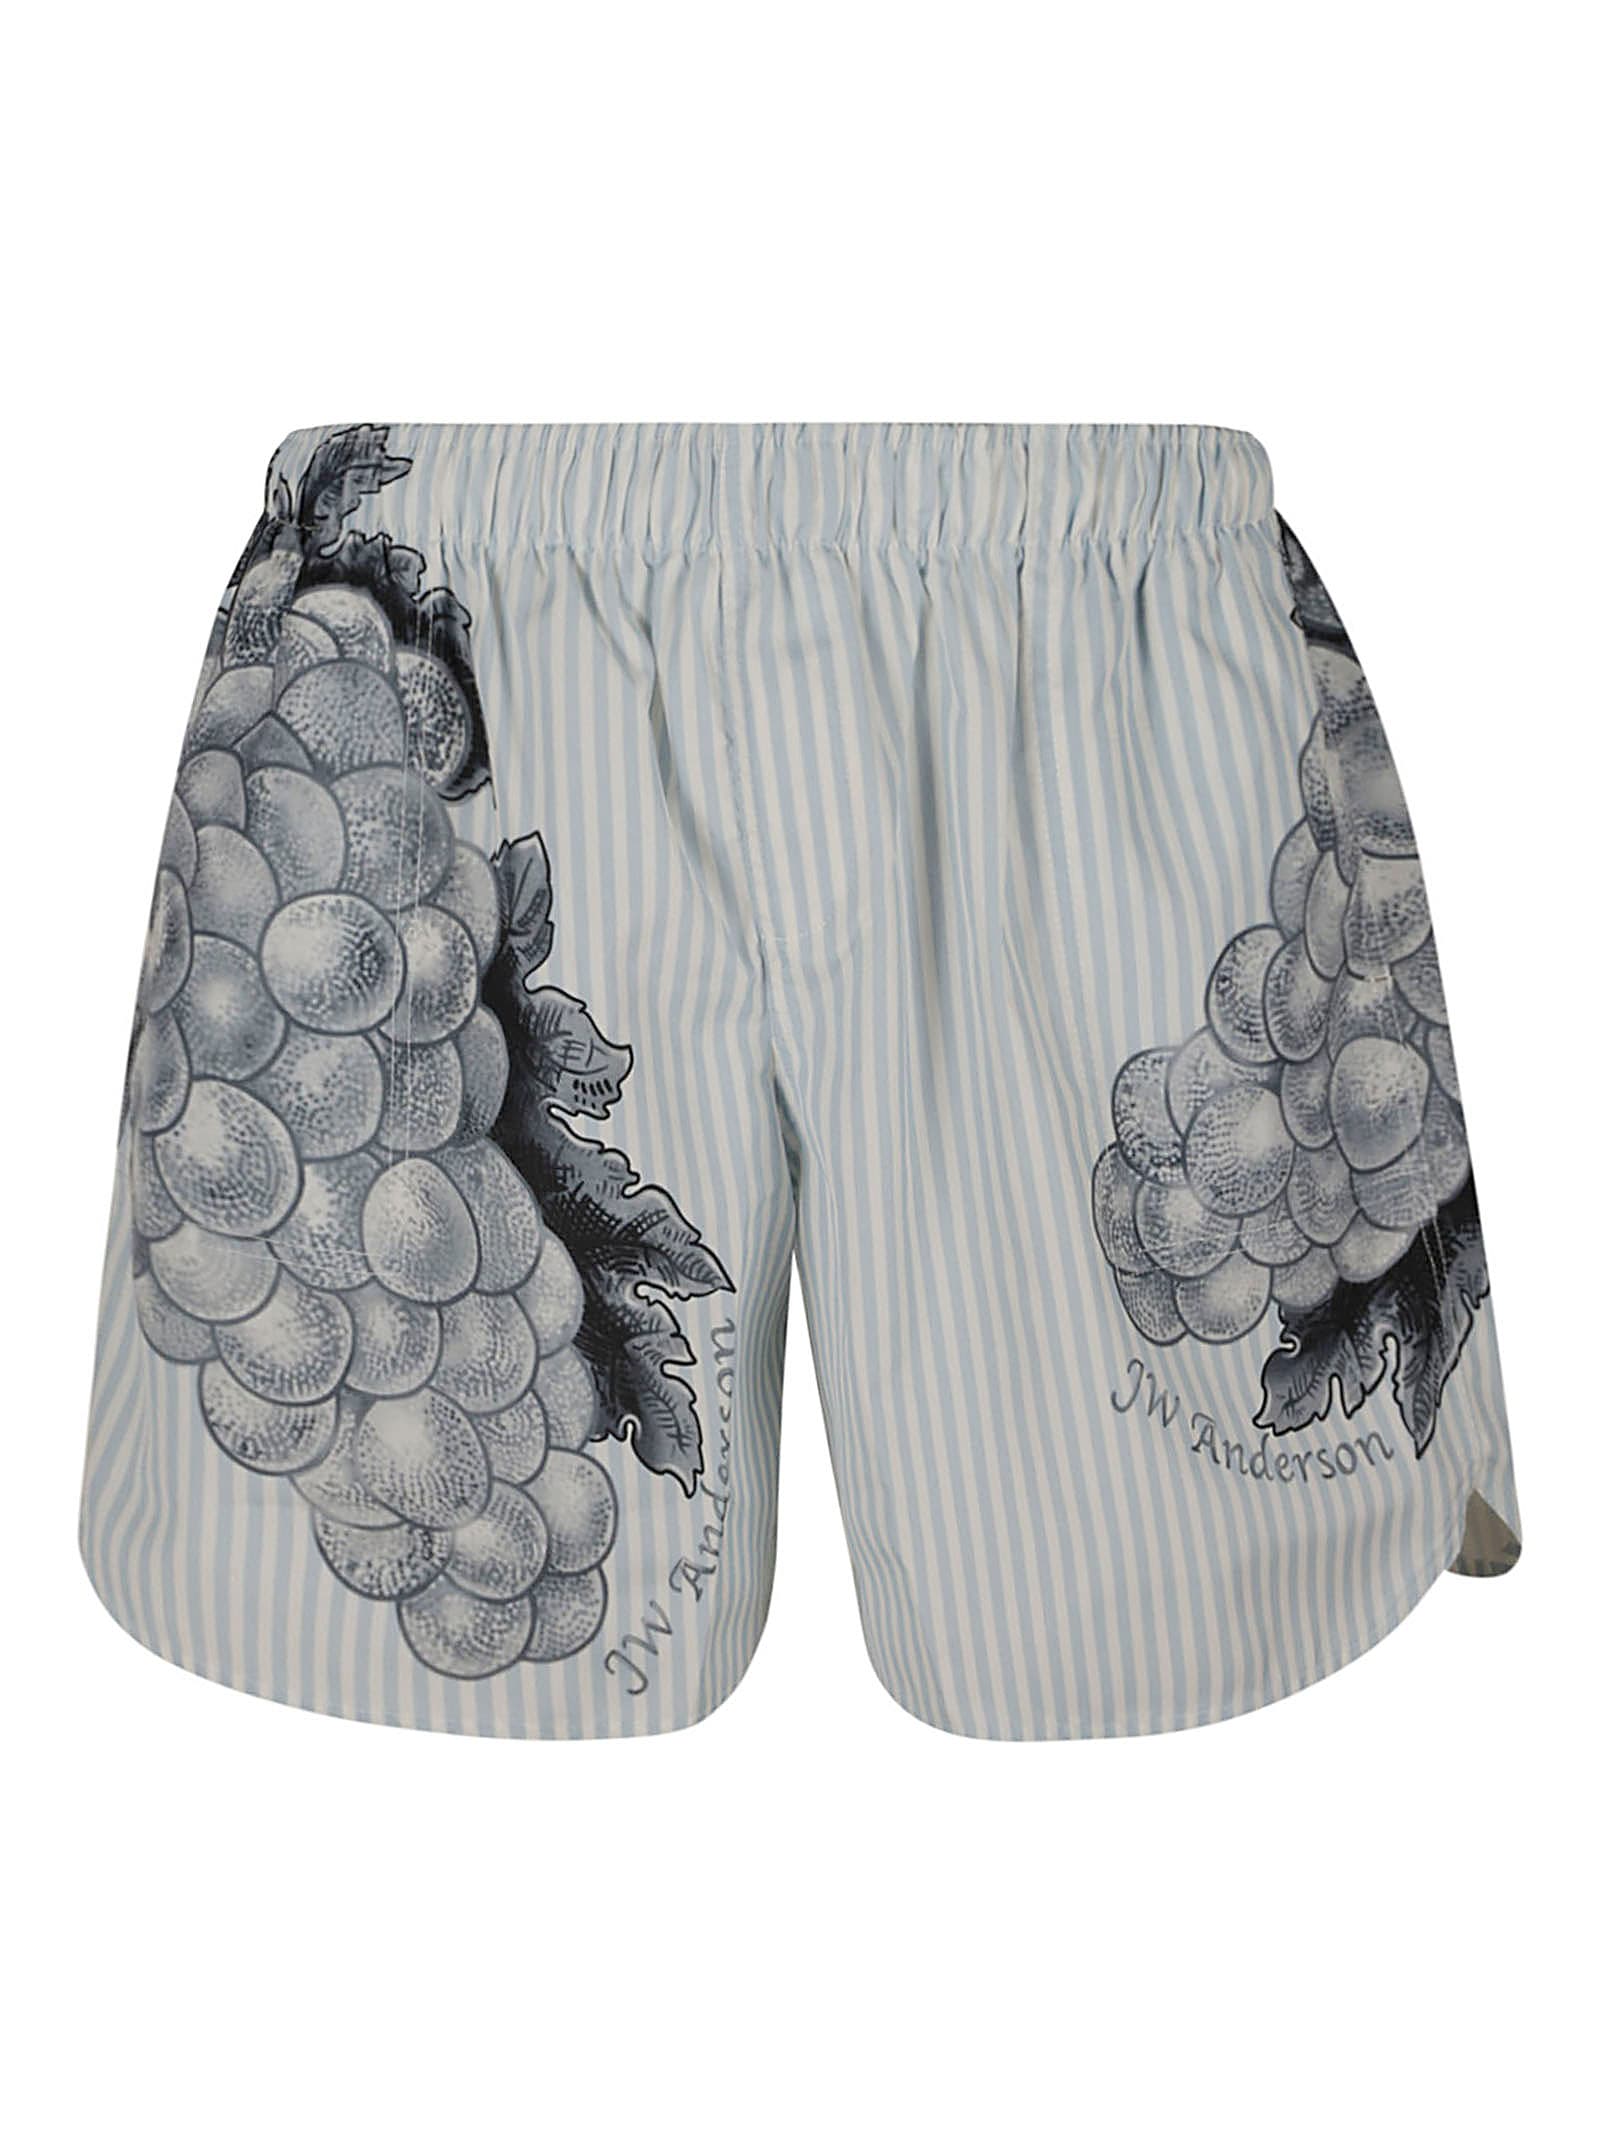 J.W. Anderson Grape Swim Shorts